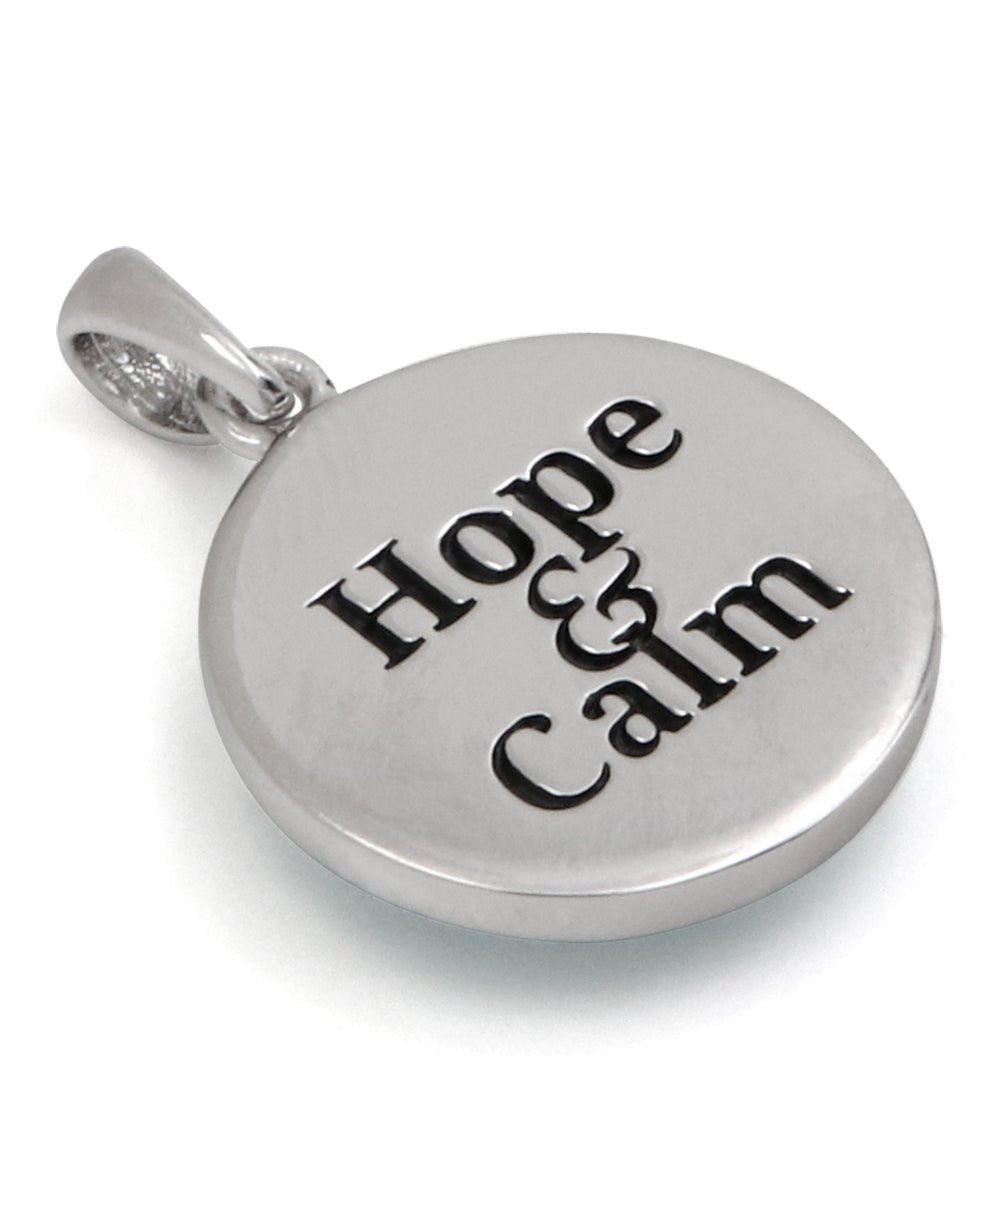 Hope and Calm Amazonite Pendant - Charms & Pendants